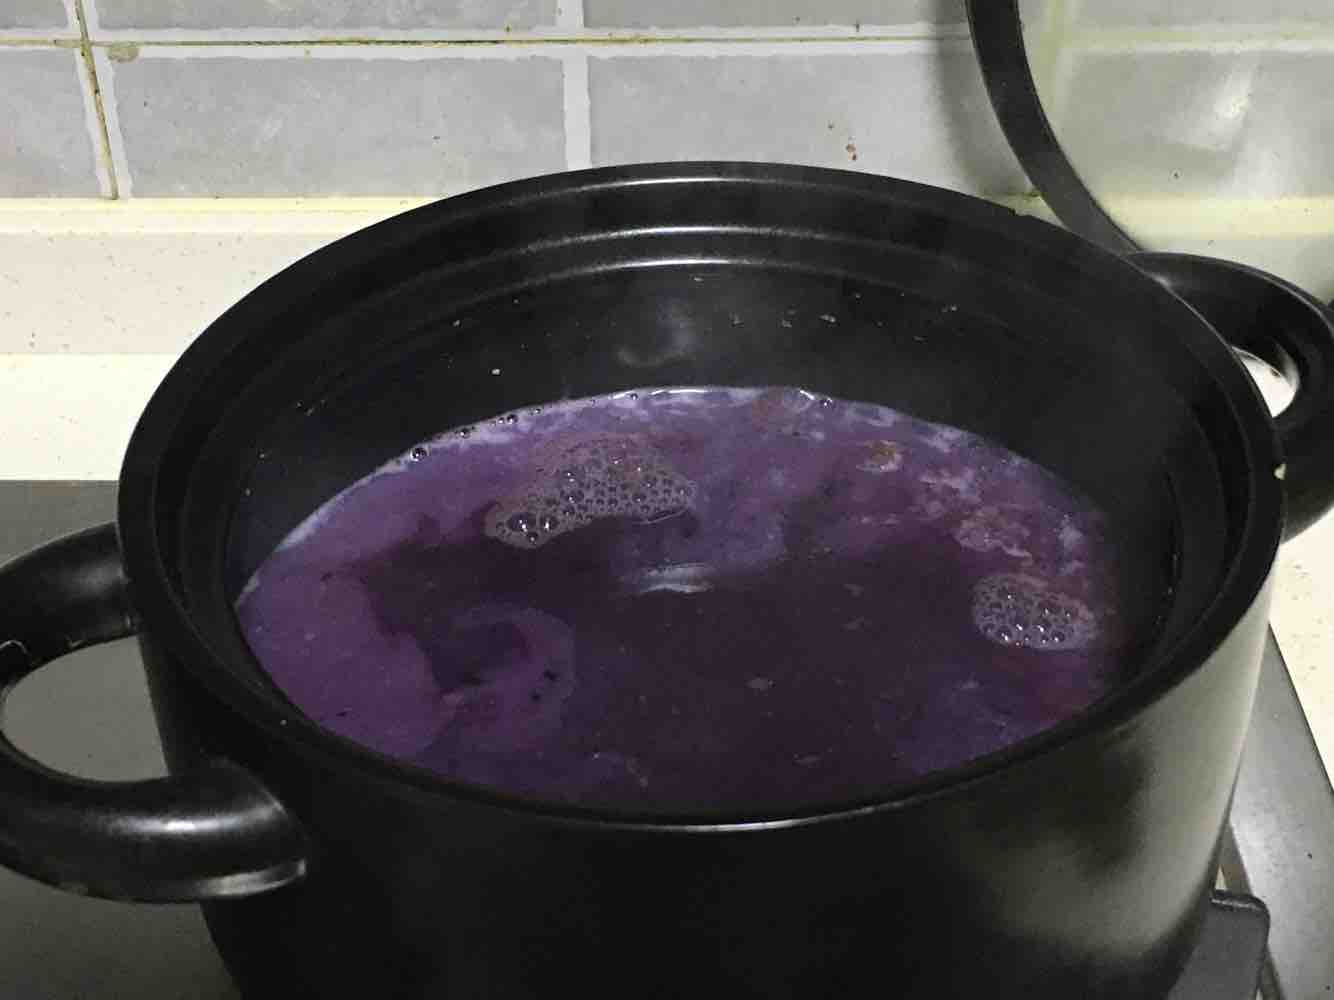 Purple Sweet Potato Oatmeal recipe